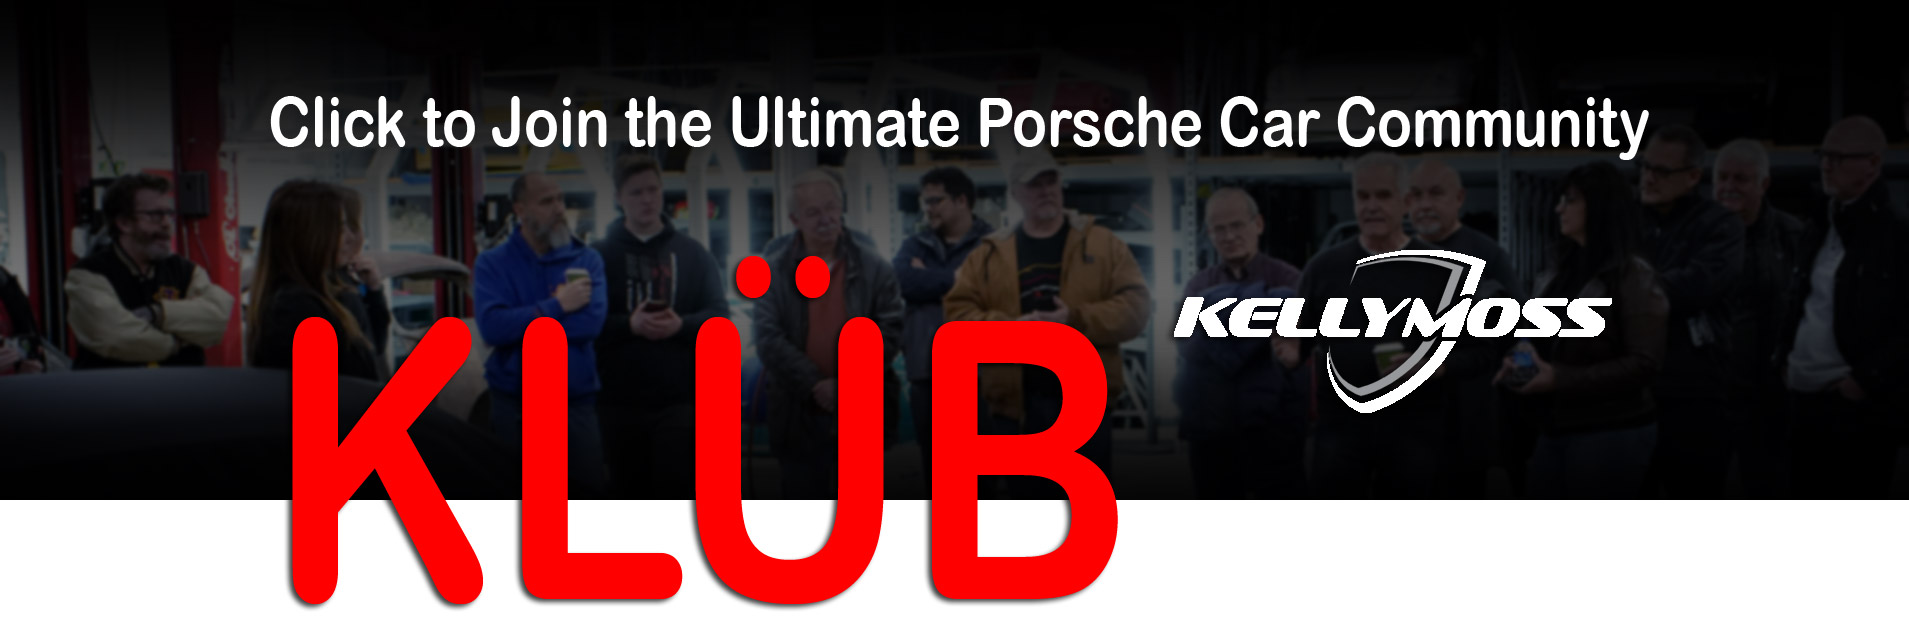 Join the Kellymoss Porsche car club community